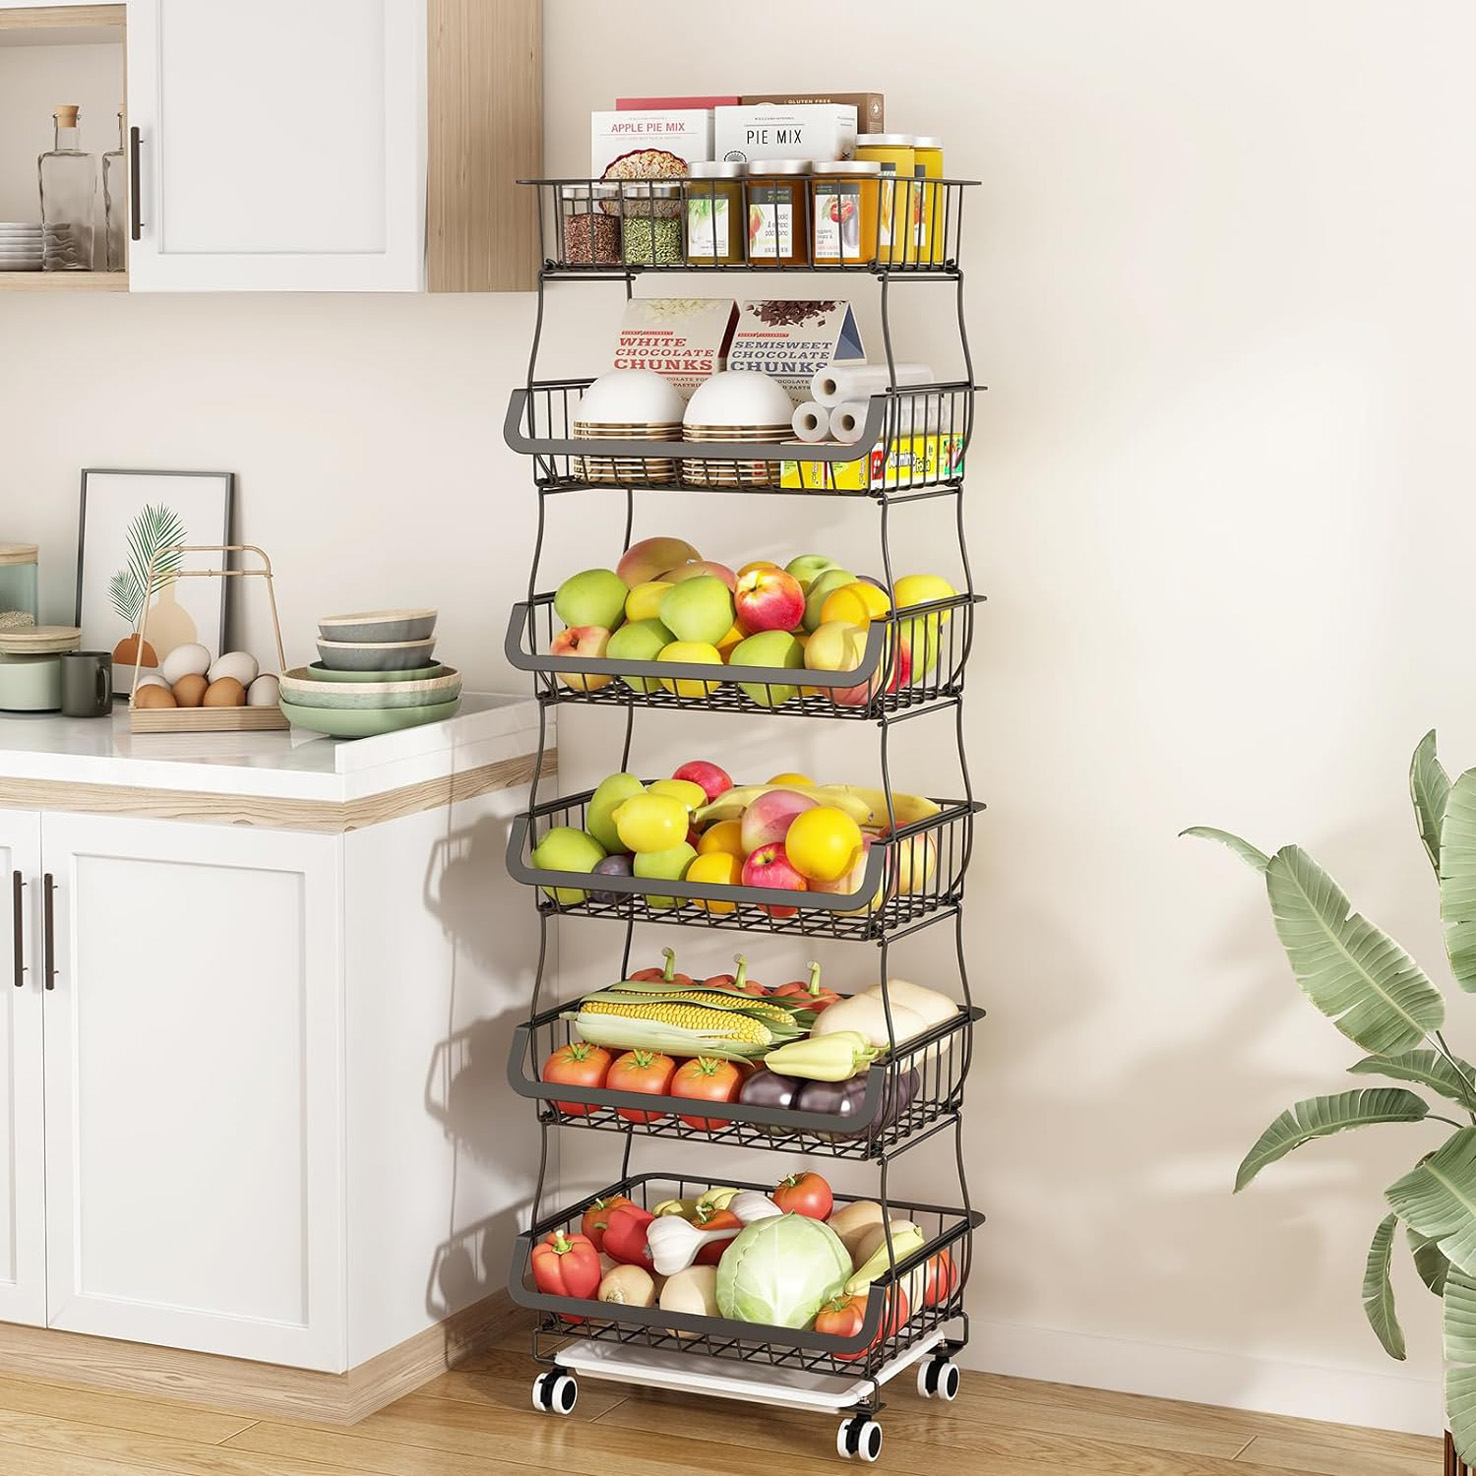 Wisdom Star 6 Tier Fruit Vegetable Basket, Wire Storage Basket Organizer Utility Cart with Wheels